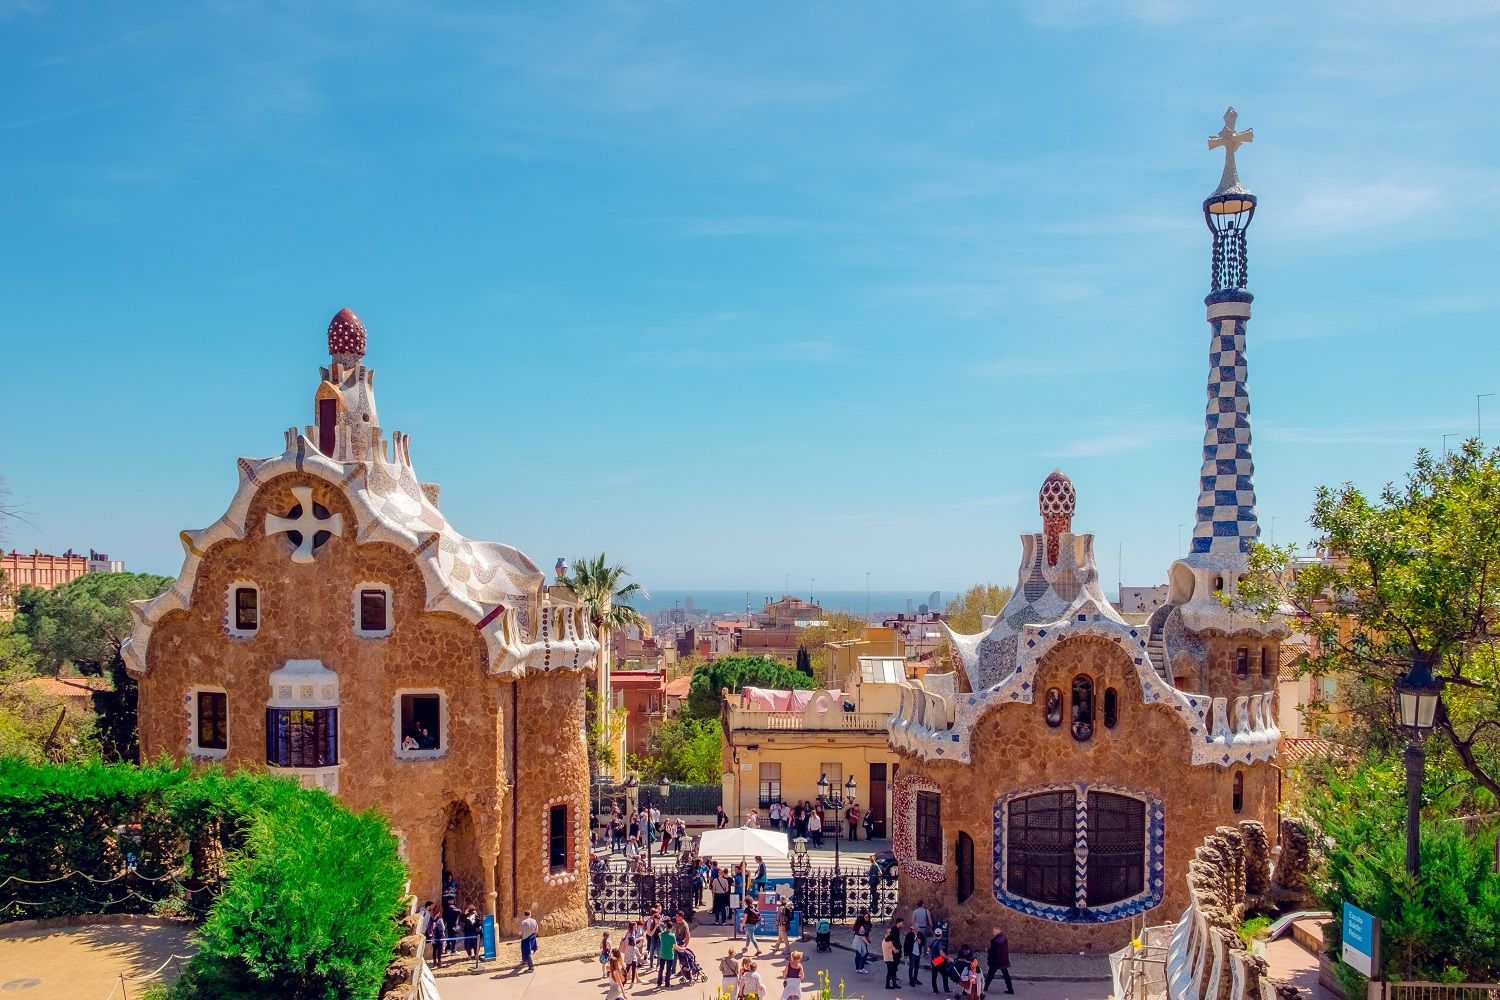 Barcelona Gaudi Tour: Artistic Barcelona including Sagrada Familia